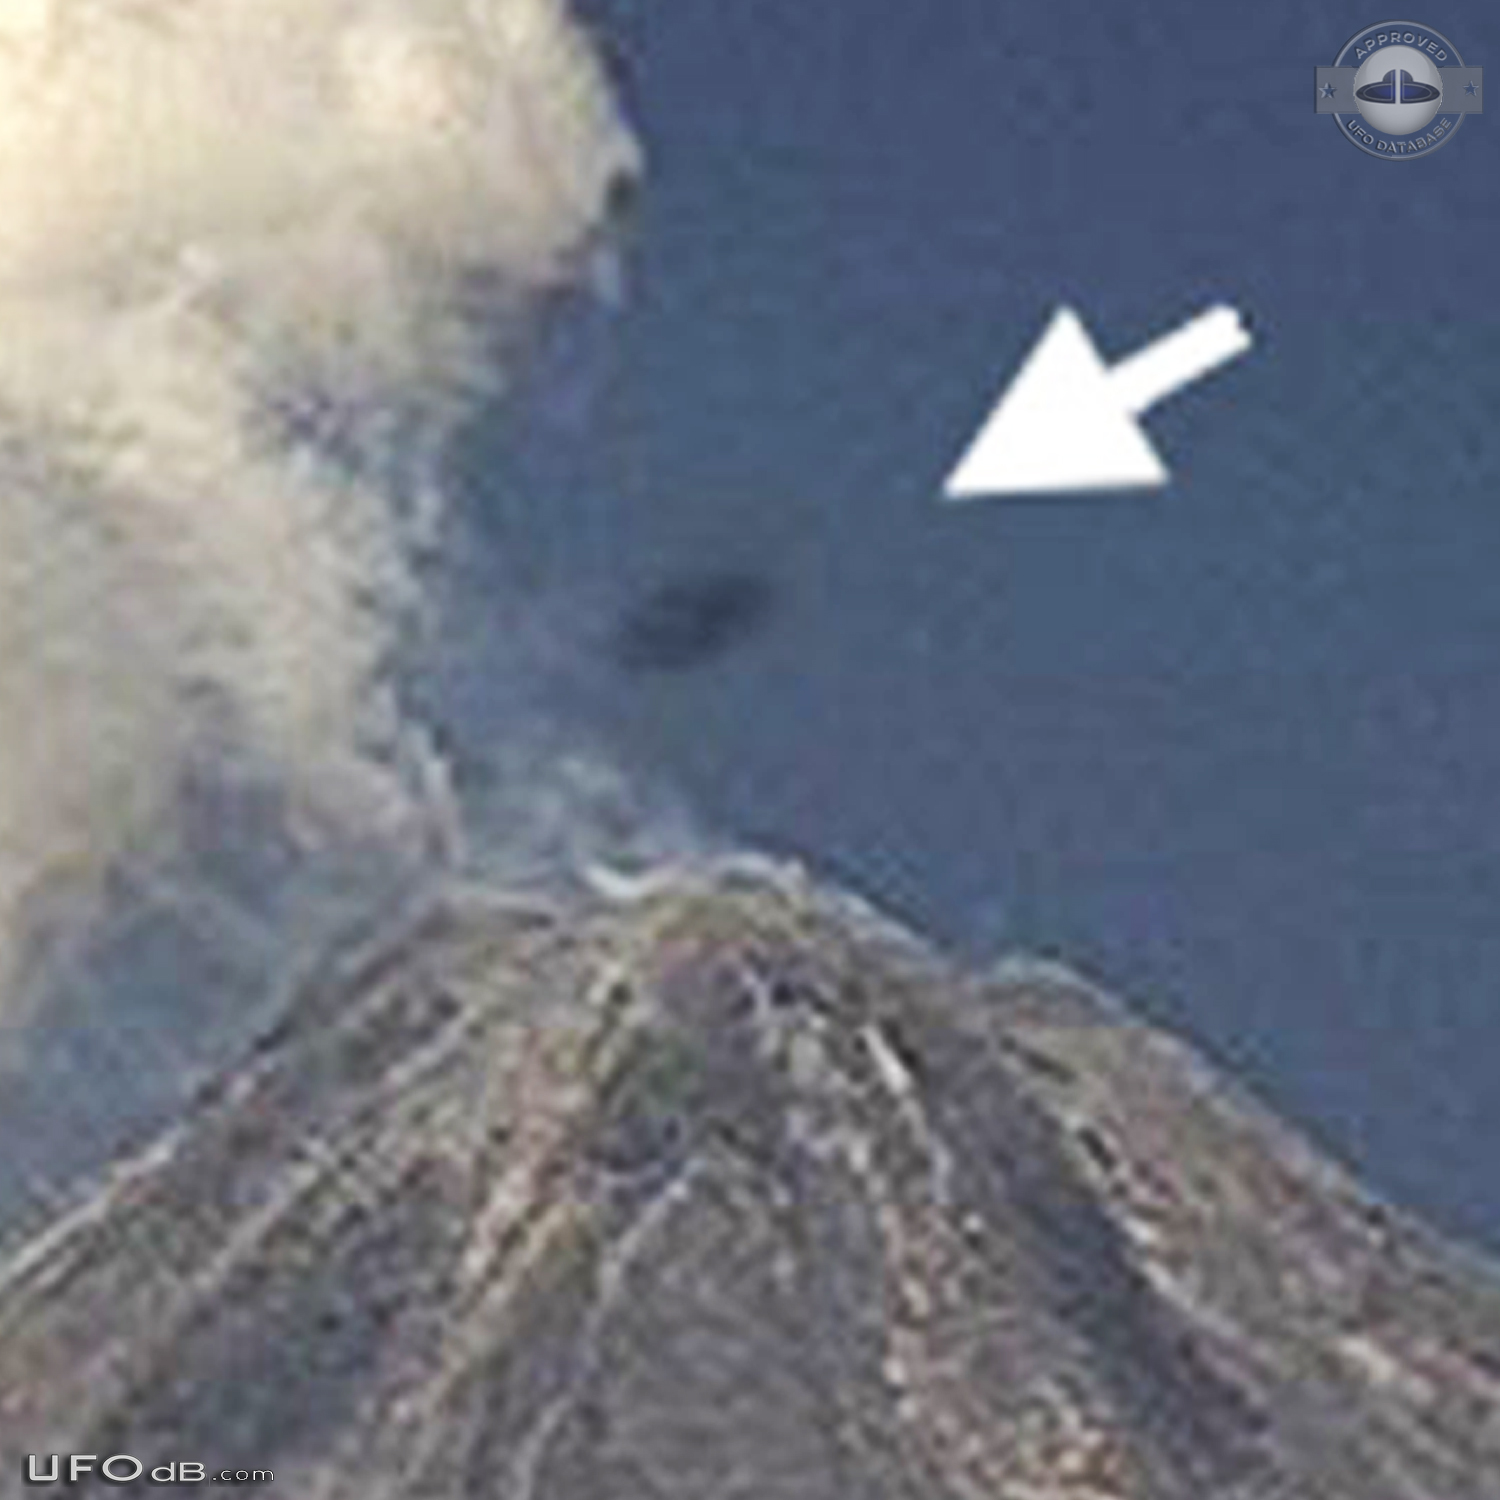 UFO caught on Volcan de Colima Webcam in Mexico - March 2015 UFO Picture #665-7